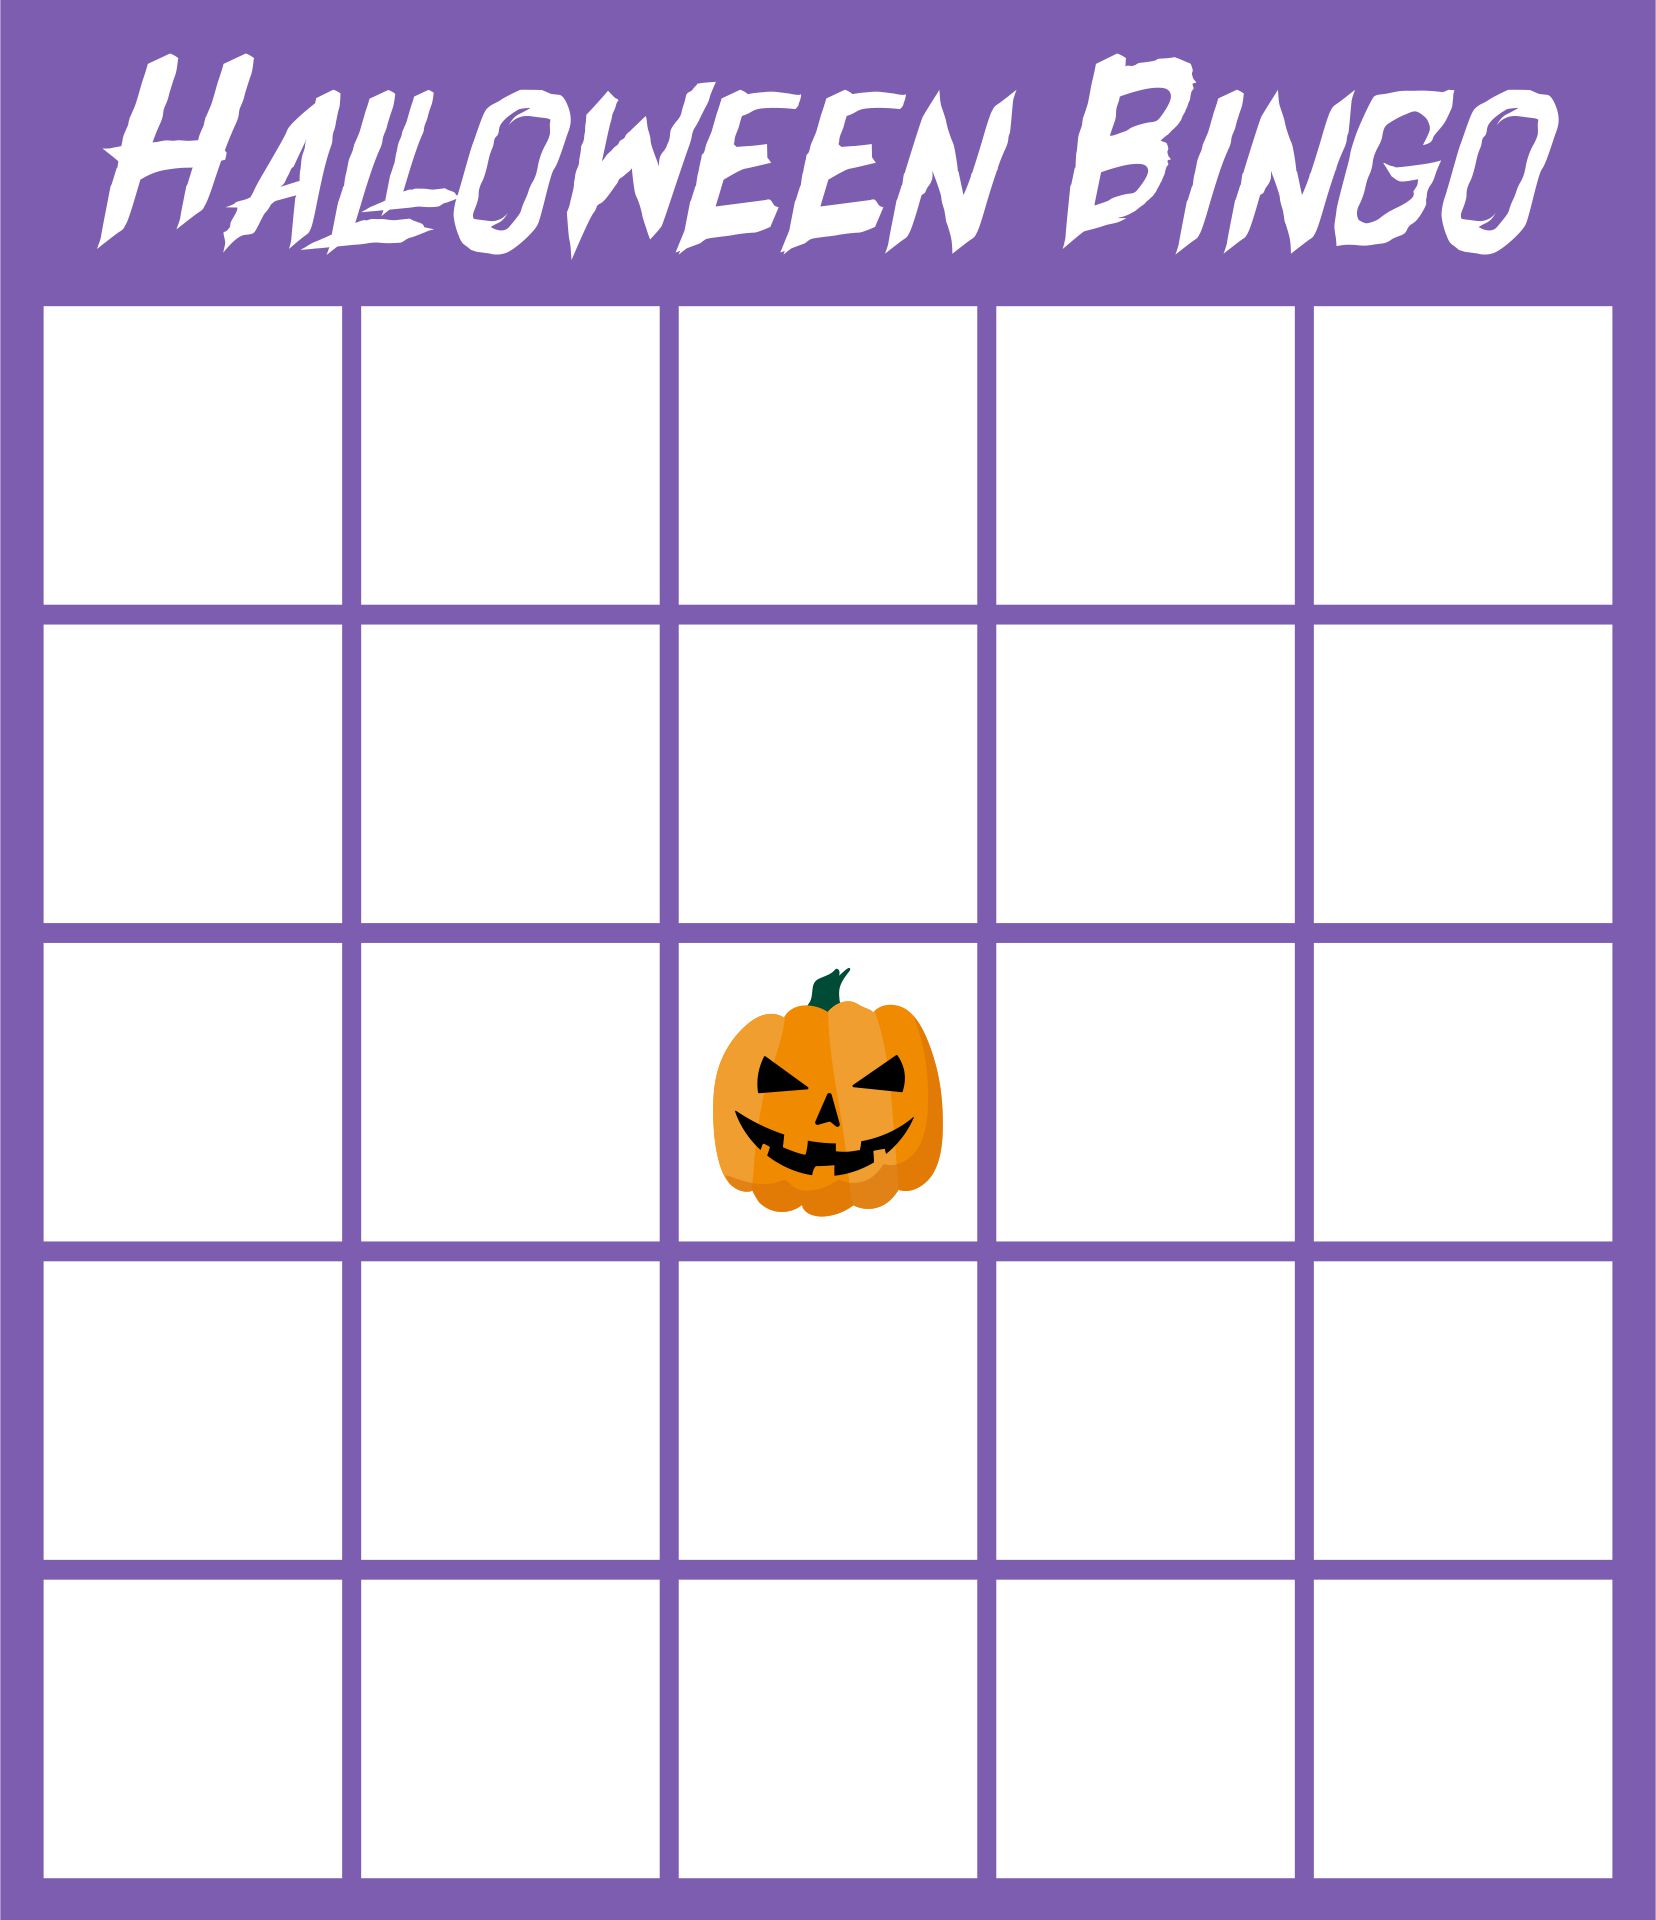 printable-halloween-bingo-game-ubicaciondepersonas-cdmx-gob-mx